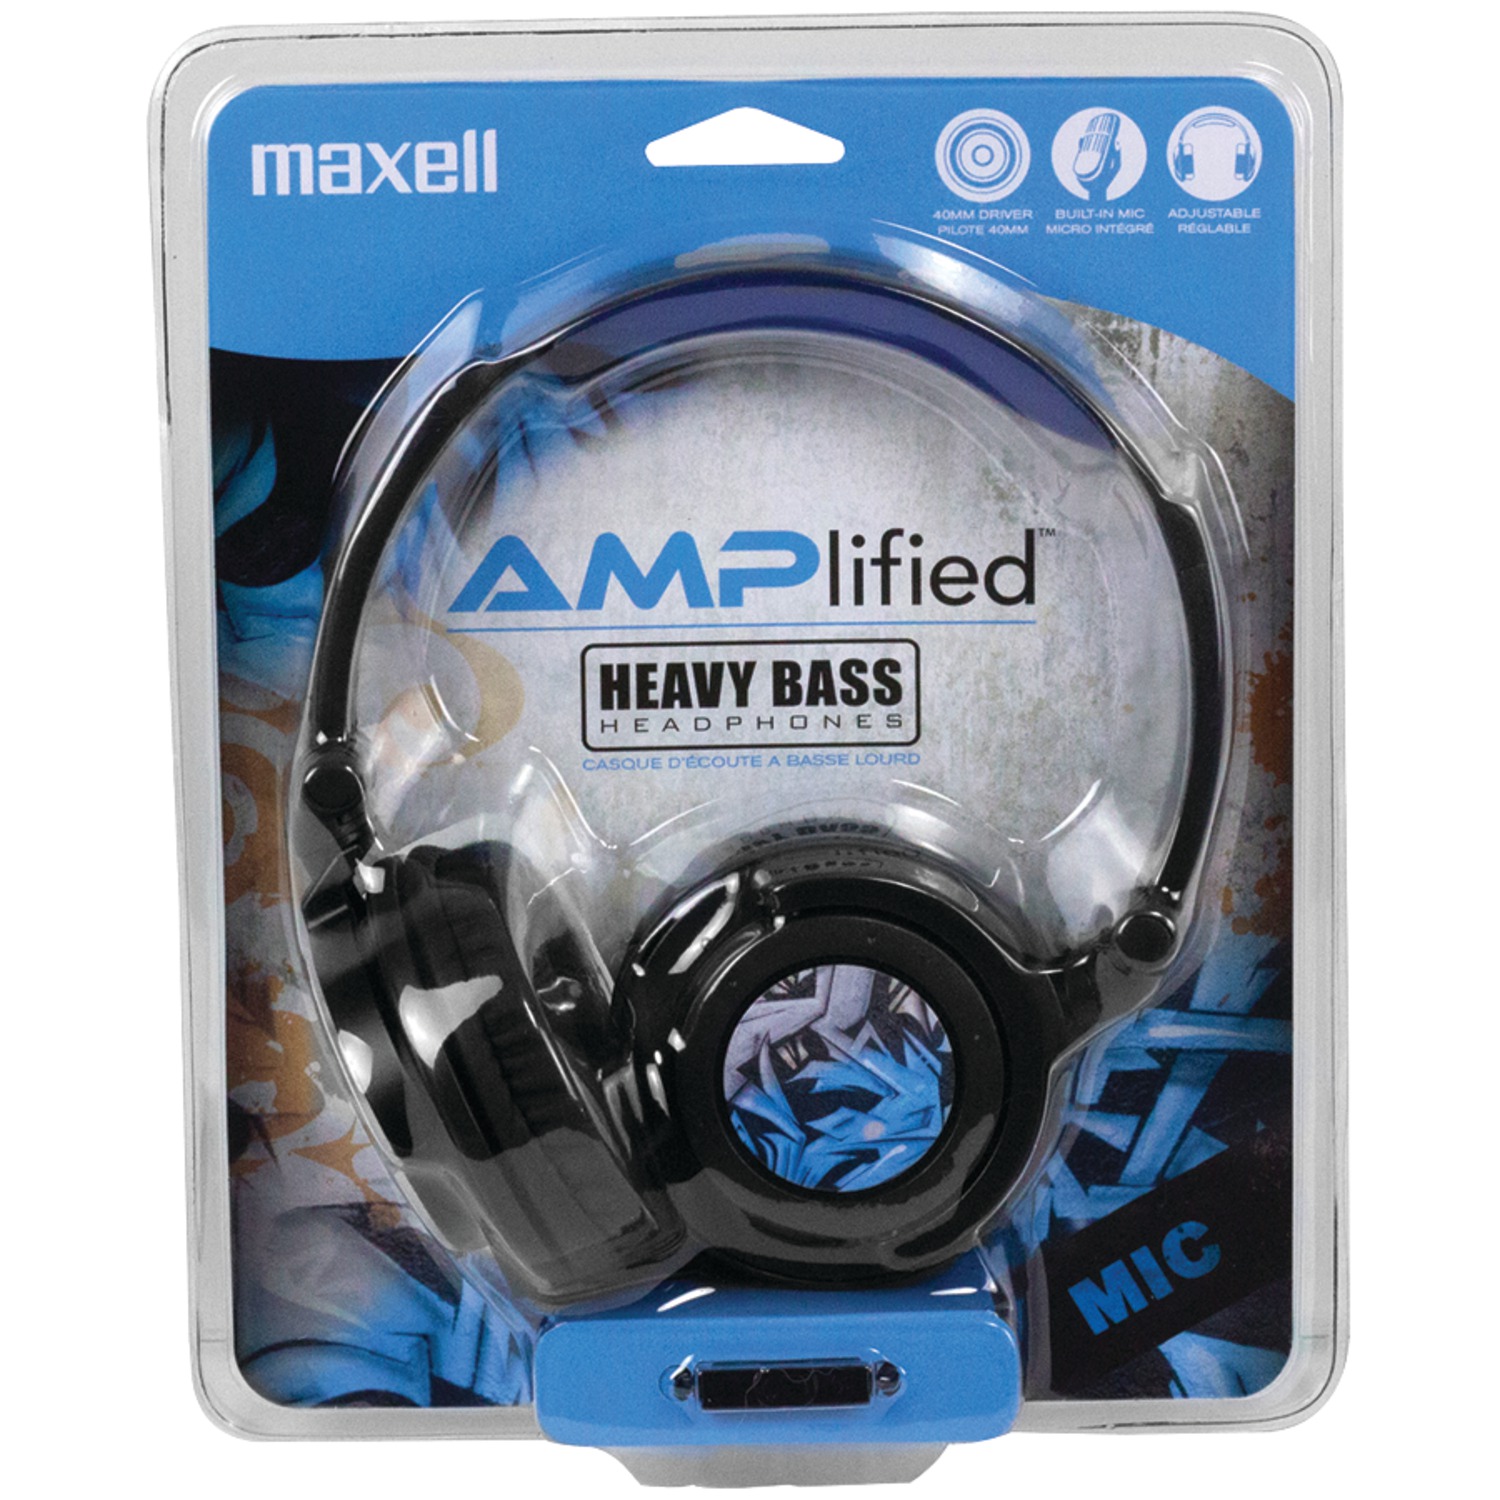 Maxell 190265 - AMPB AMPlified Heavy Bass Headphones (Blue Tribal) - image 2 of 9